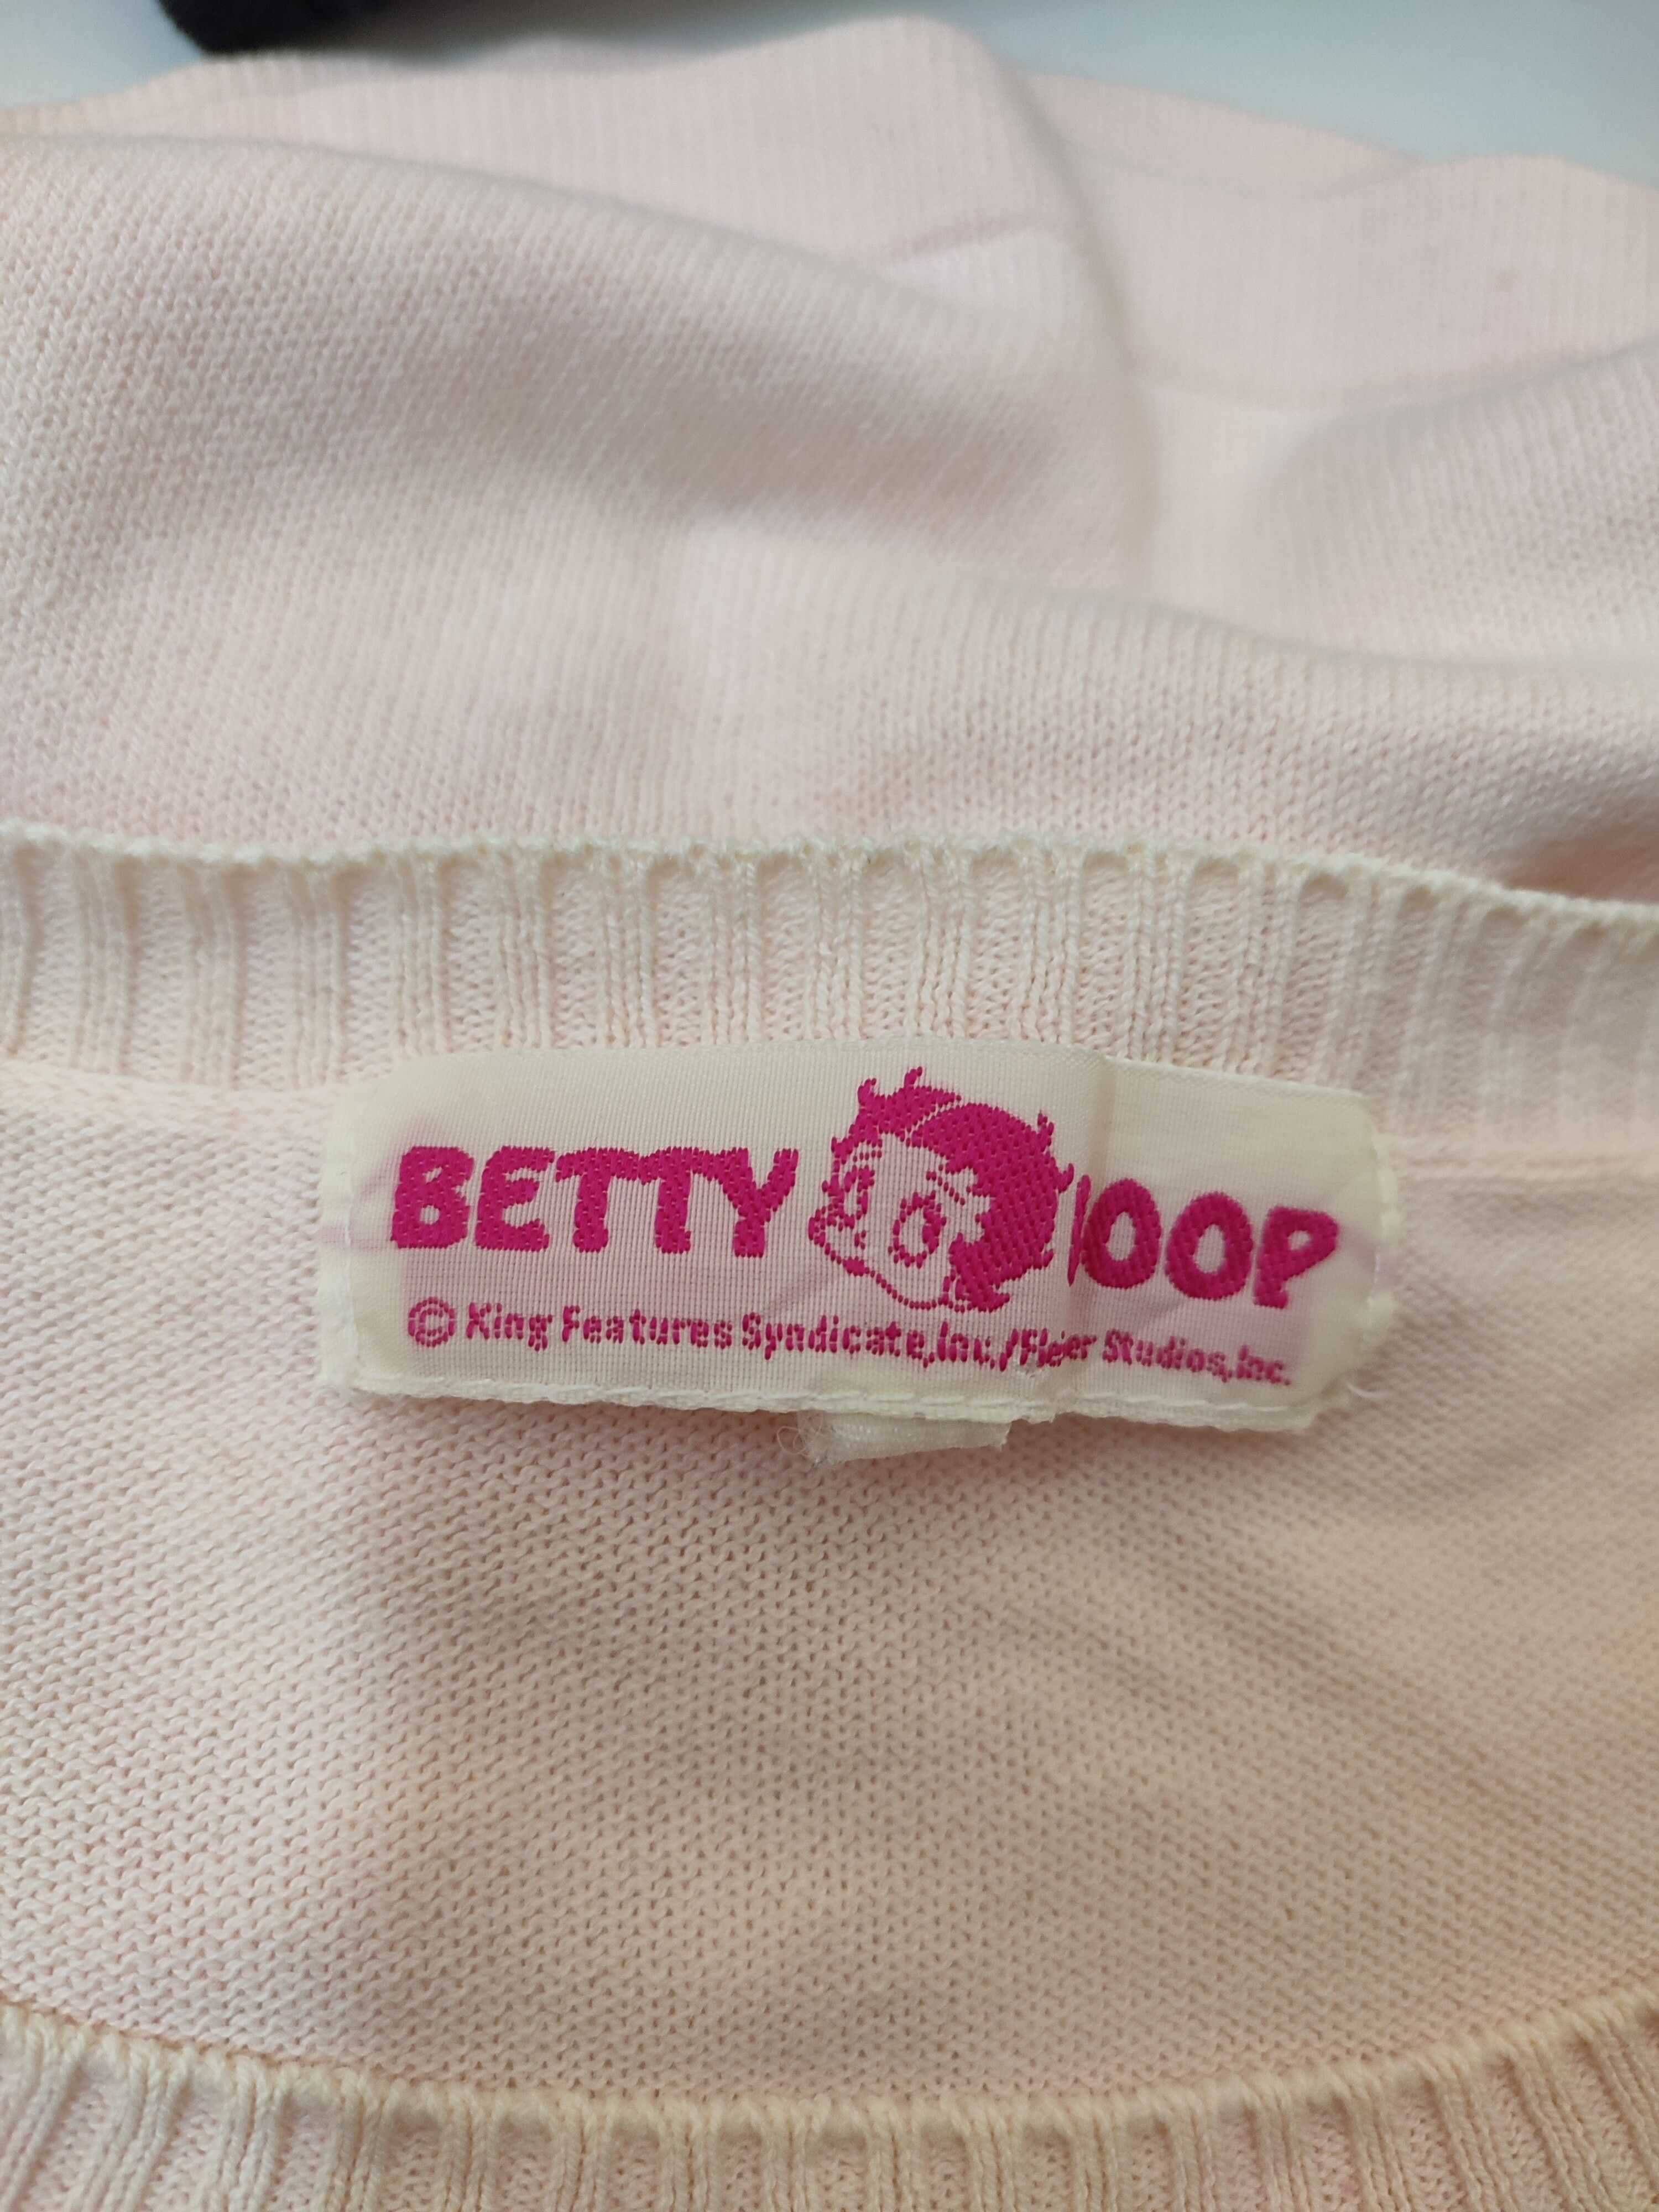 Vintage 💥 Crazy Vintage 90s Betty Boop Tee💥 Size US M / EU 48-50 / 2 - 6 Preview